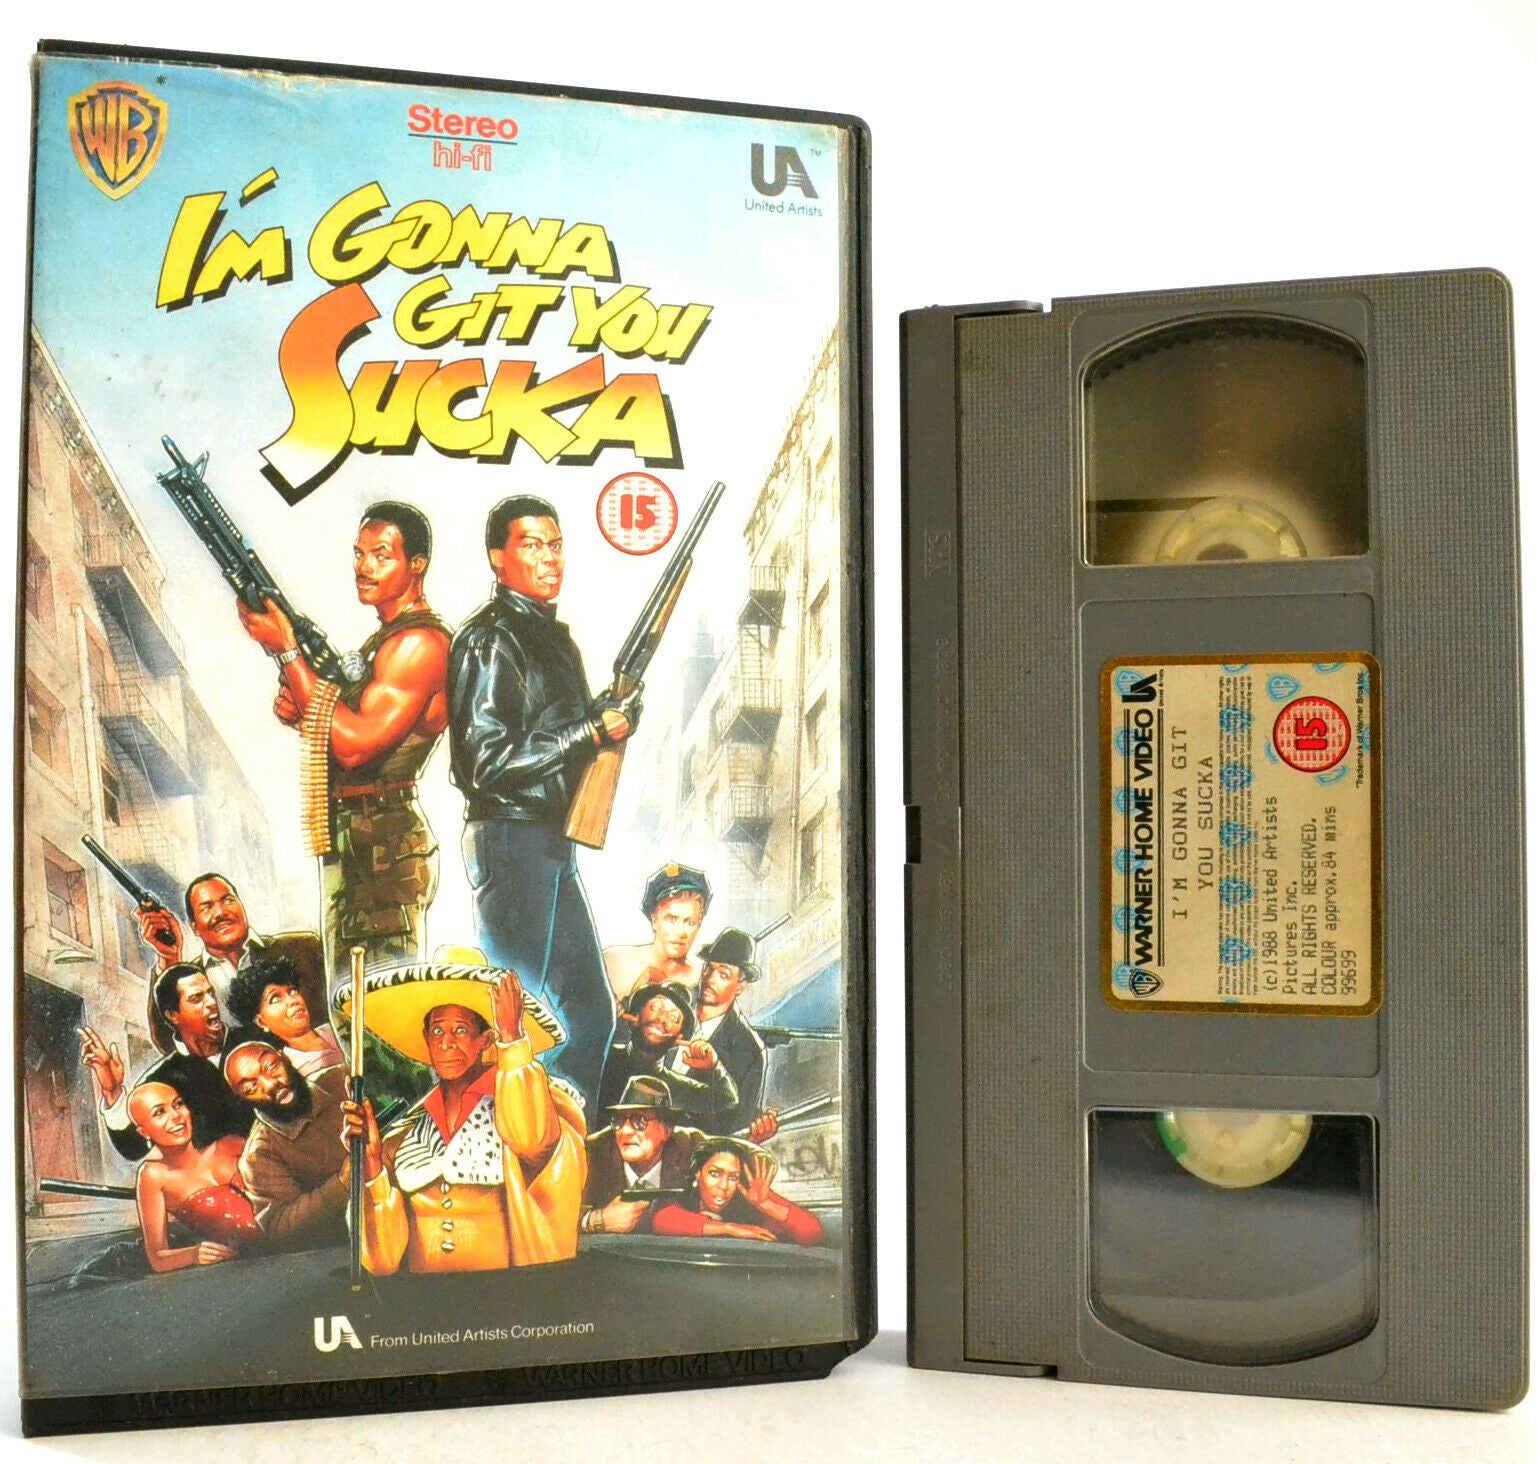 I'm Gonna Git You Sucka: A Parody Comedy - Large Box - Keenen Ivory Wayans - VHS-